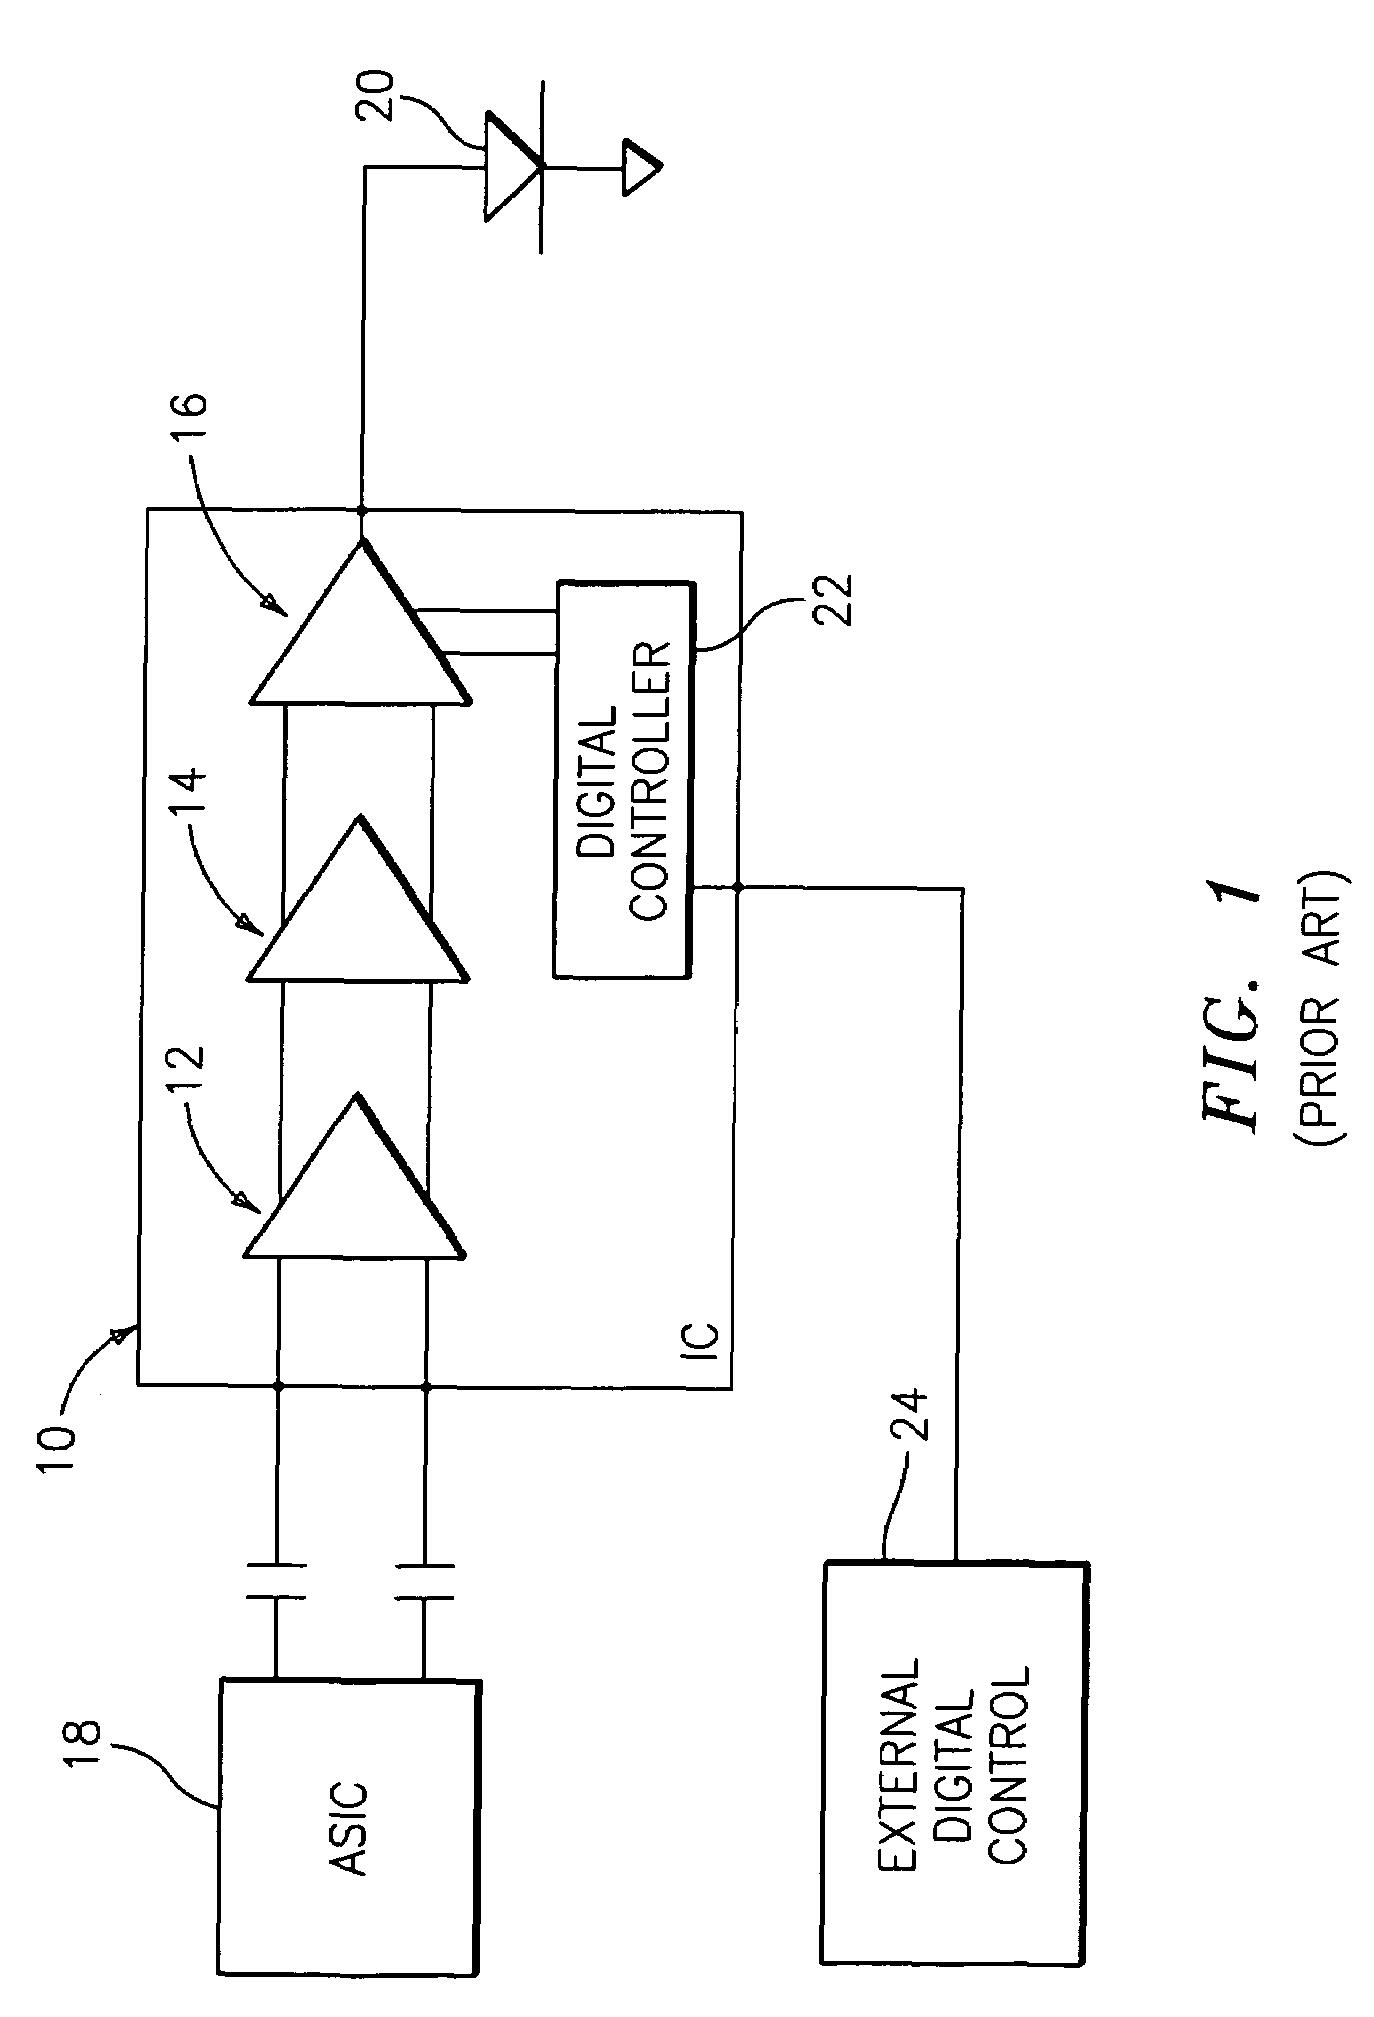 Integrated circuit having on-chip laser burn-in circuit